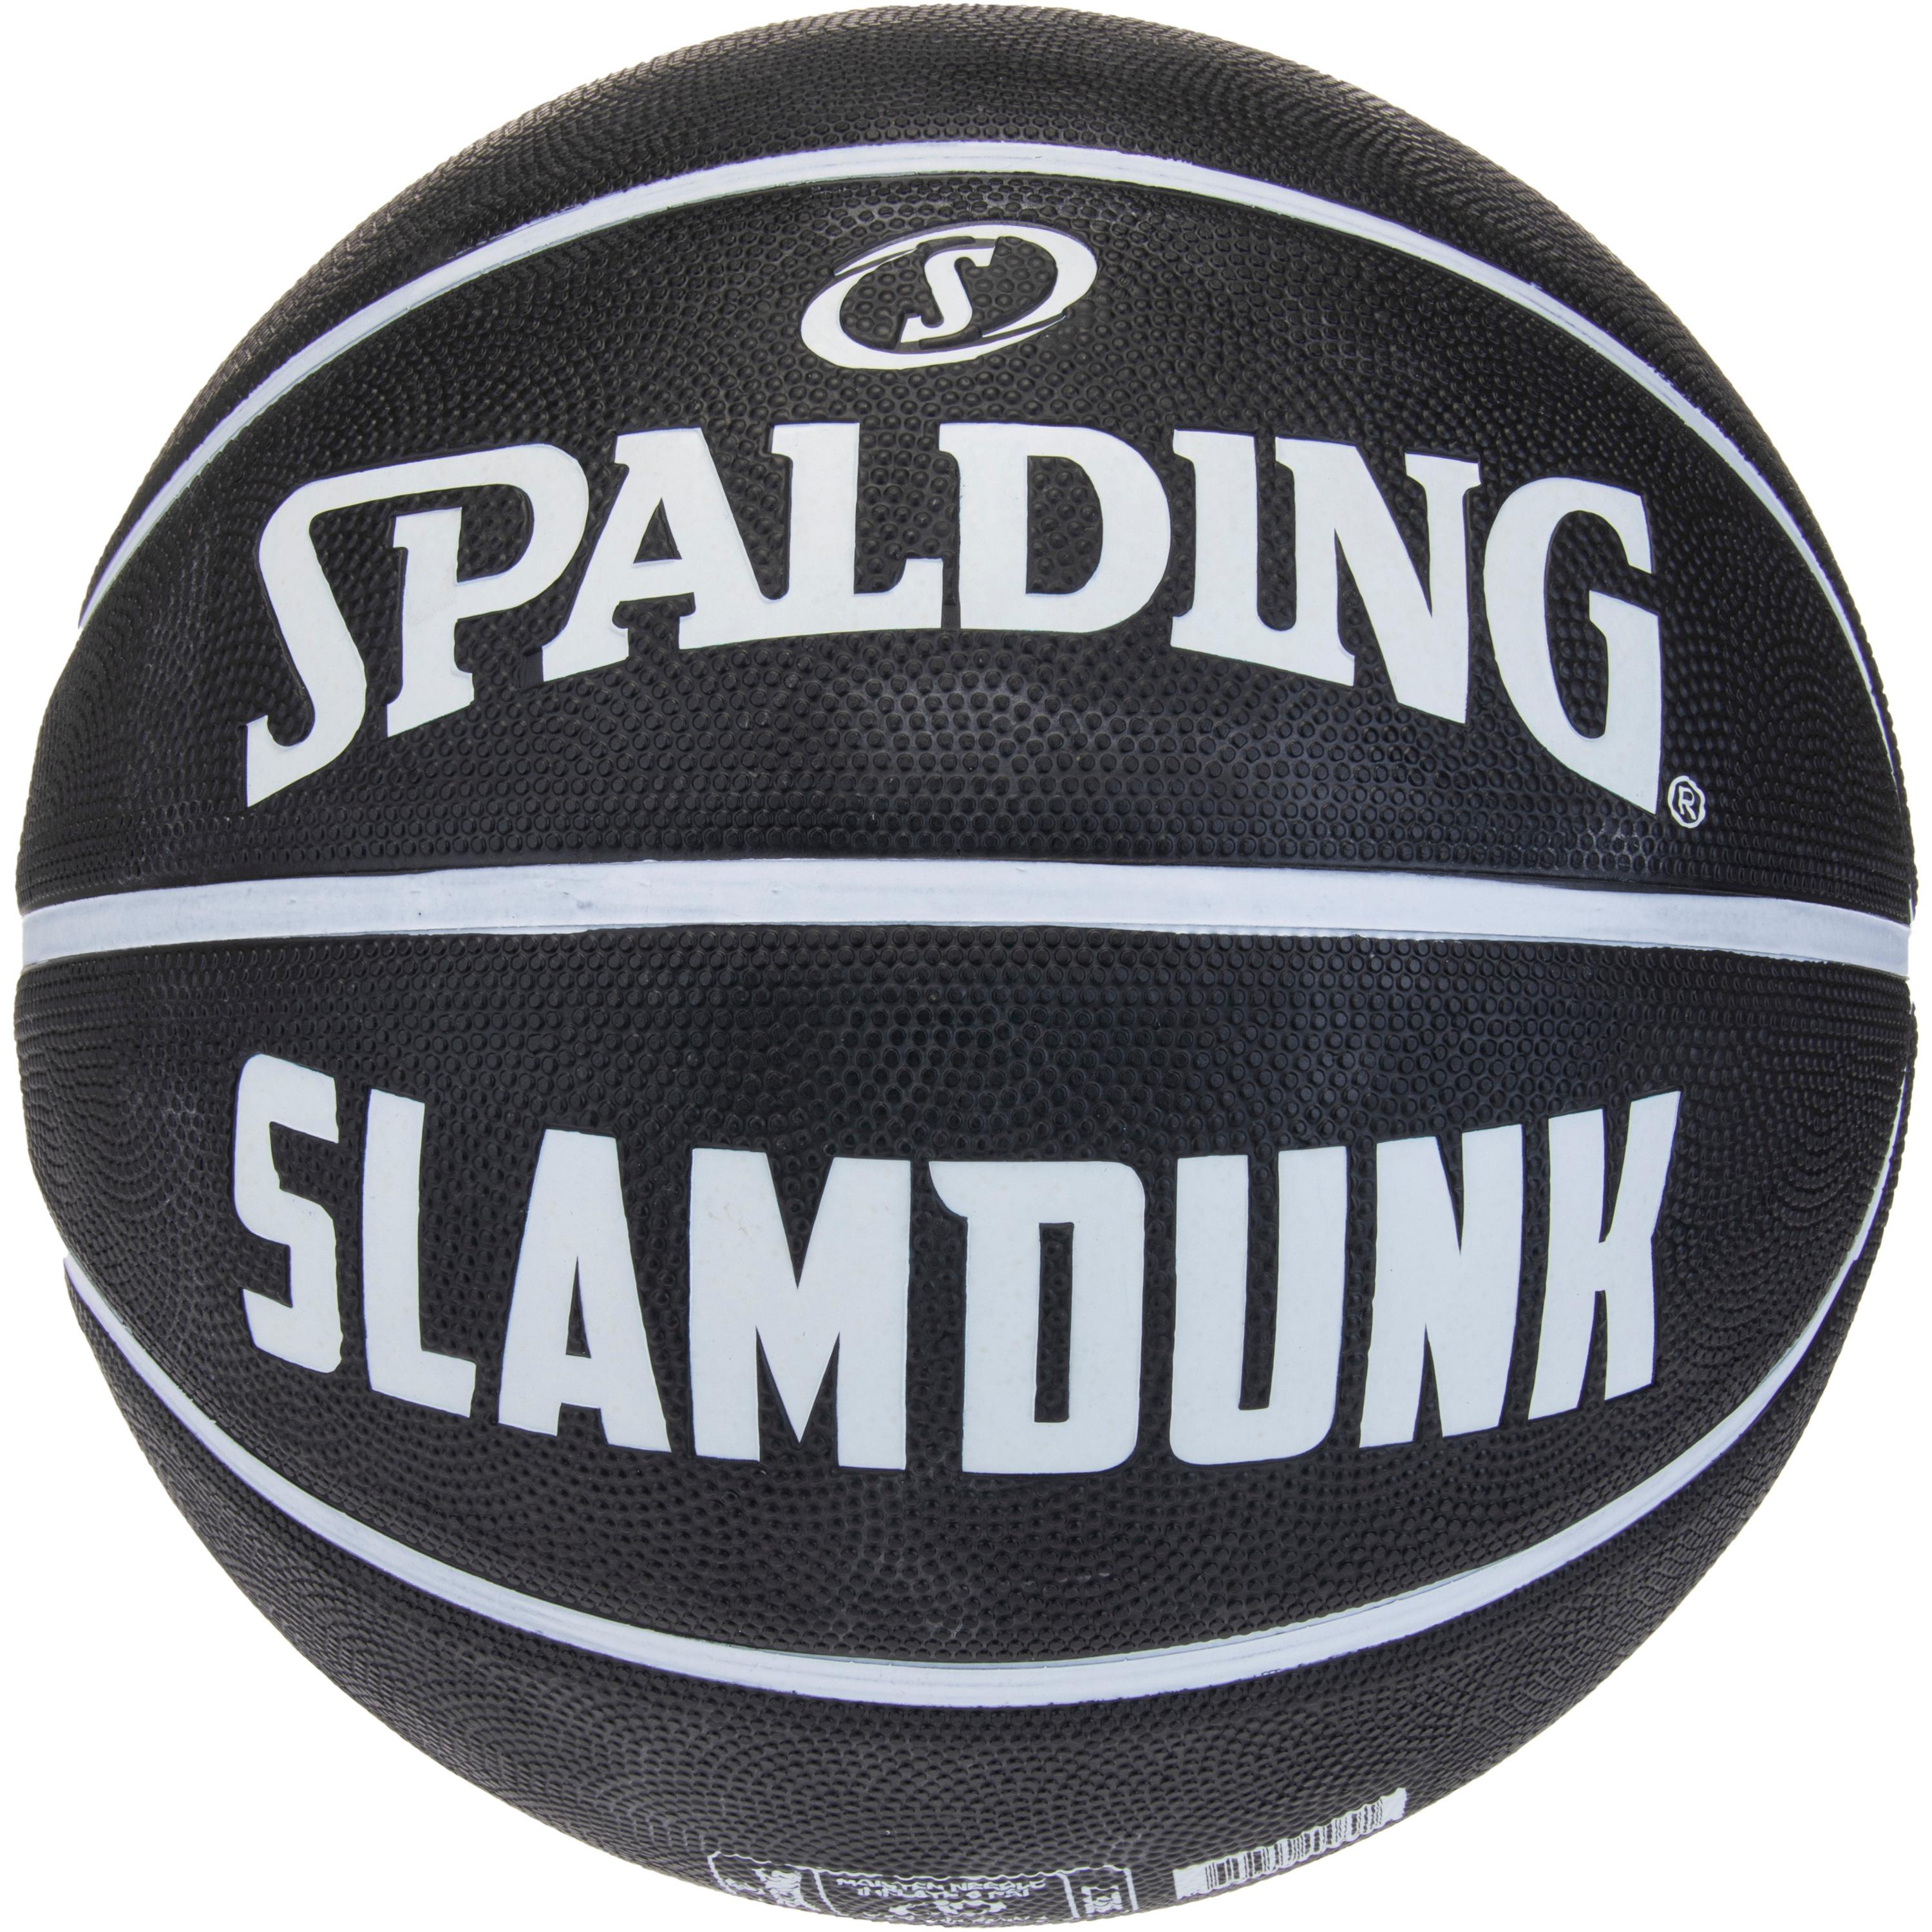 Image of Spalding Slam Dunk Basketball